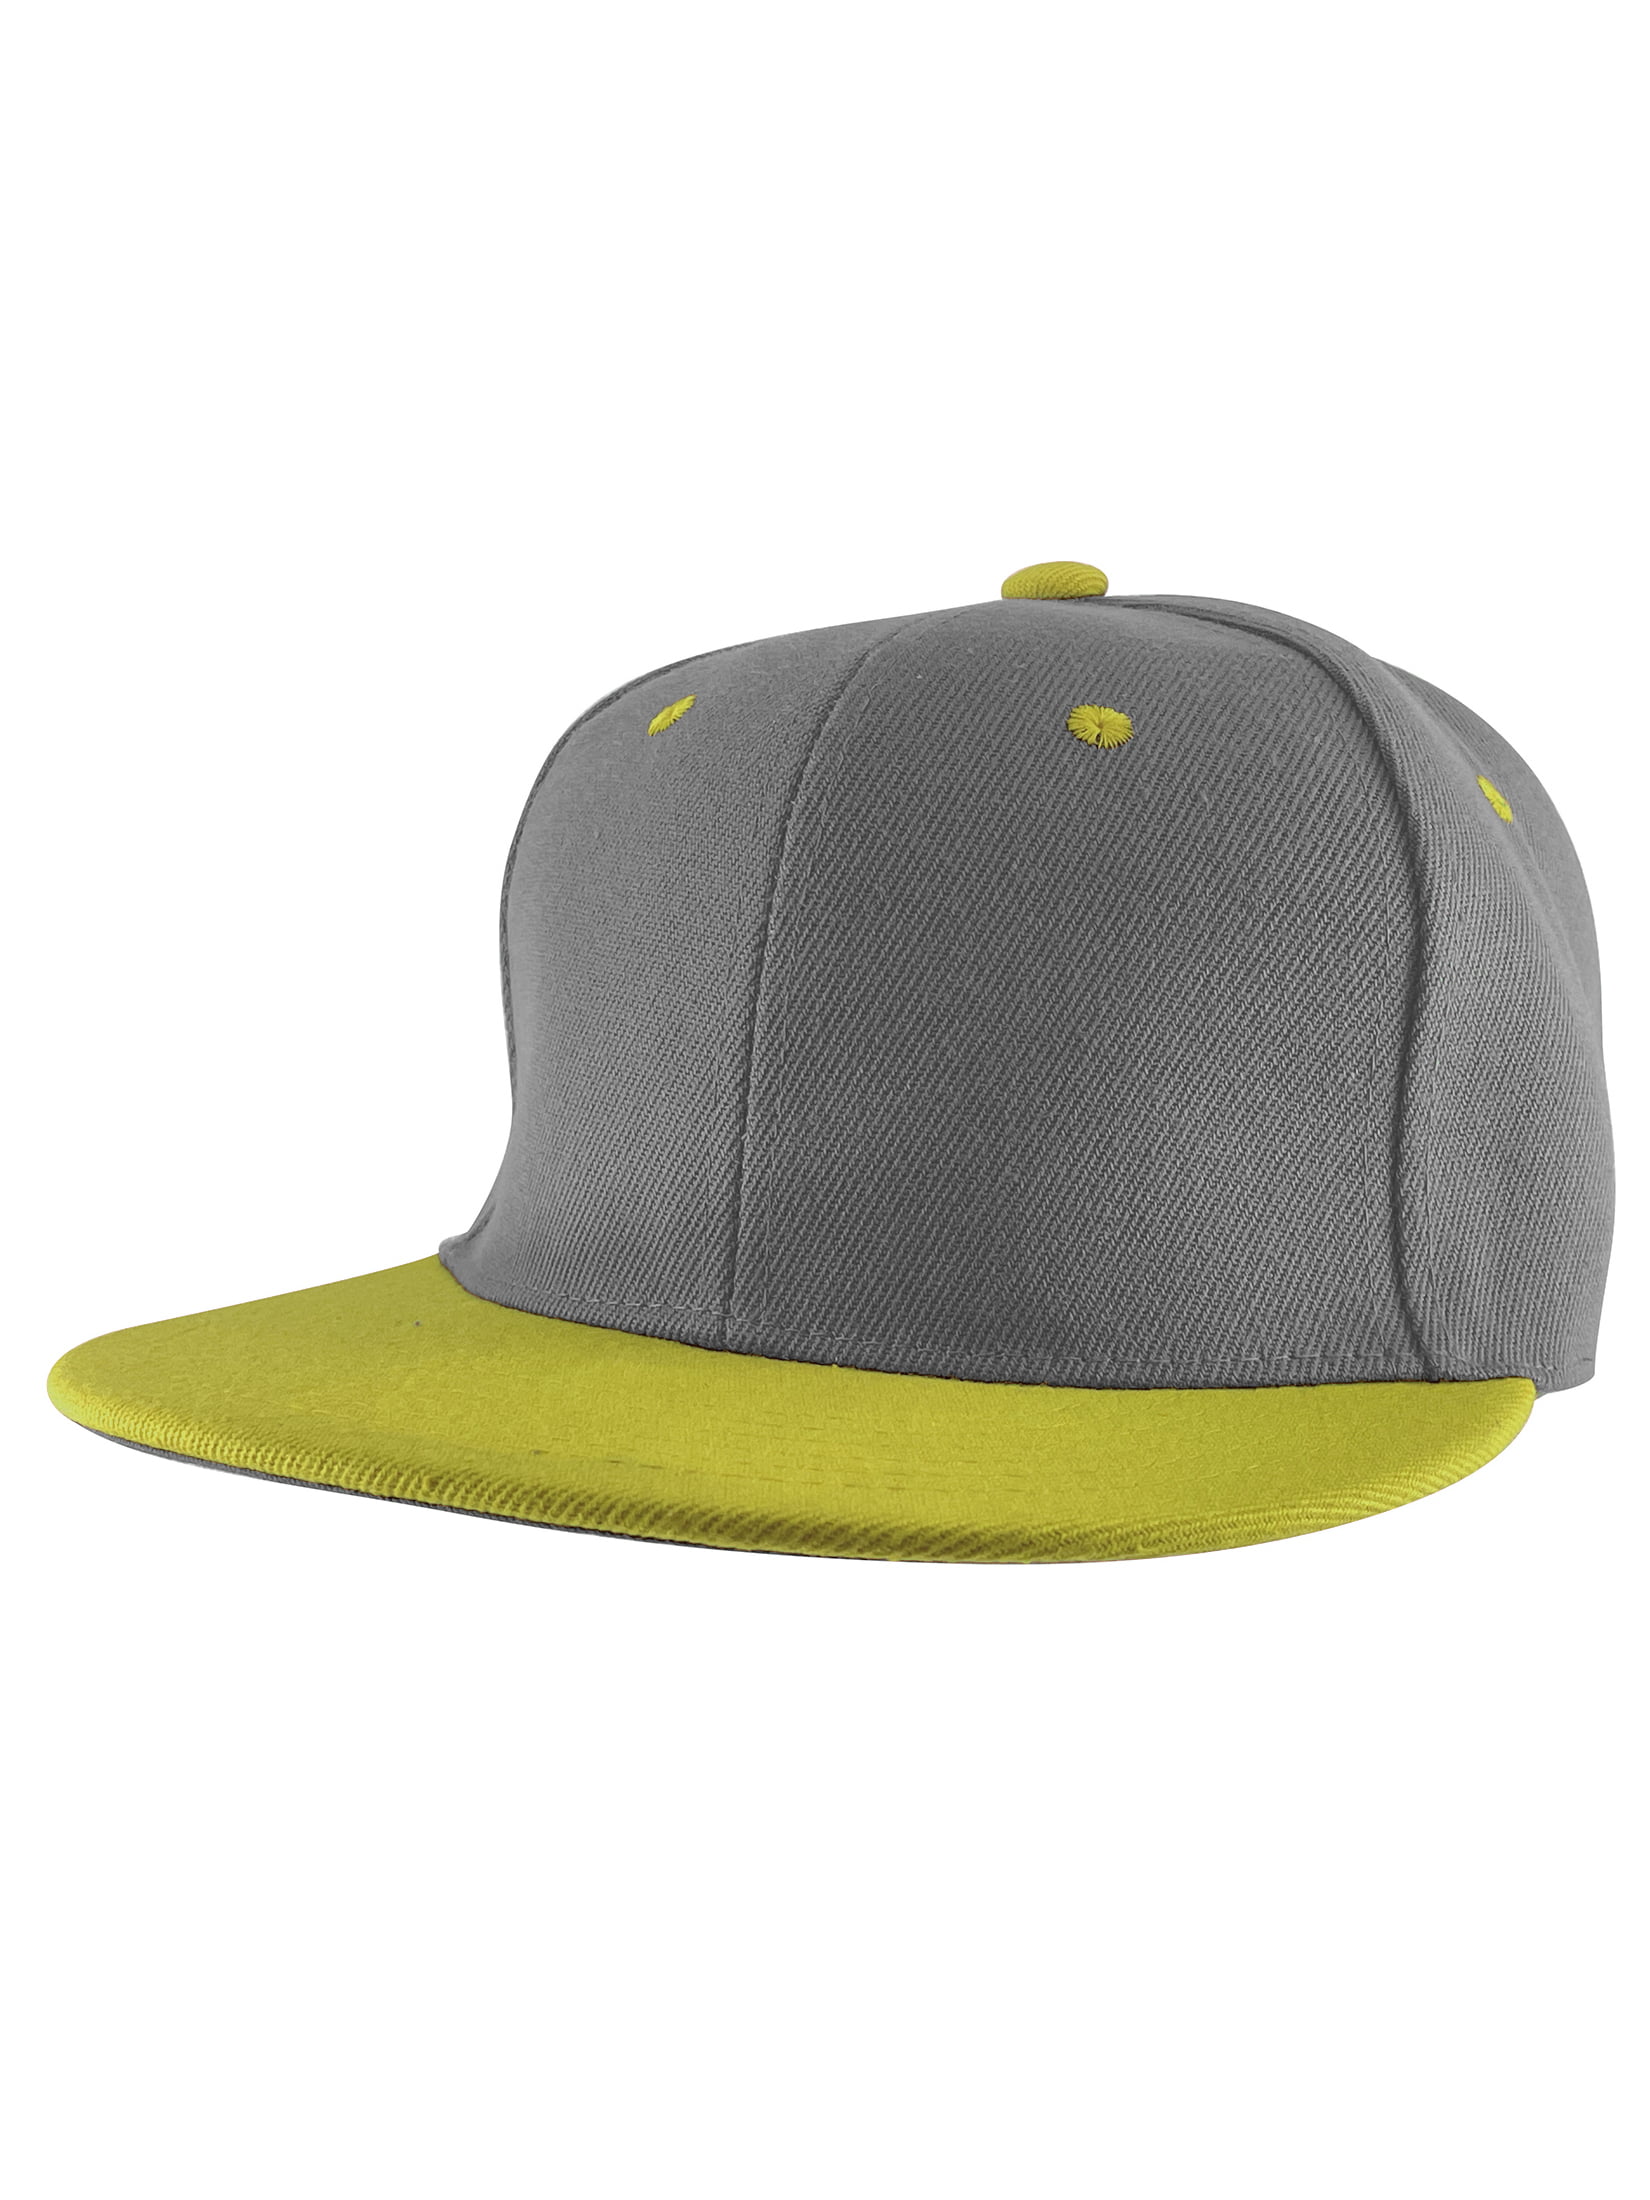 Top Headwear Flat Bill Adjustable Snapback Cap - Kelly Green/Black